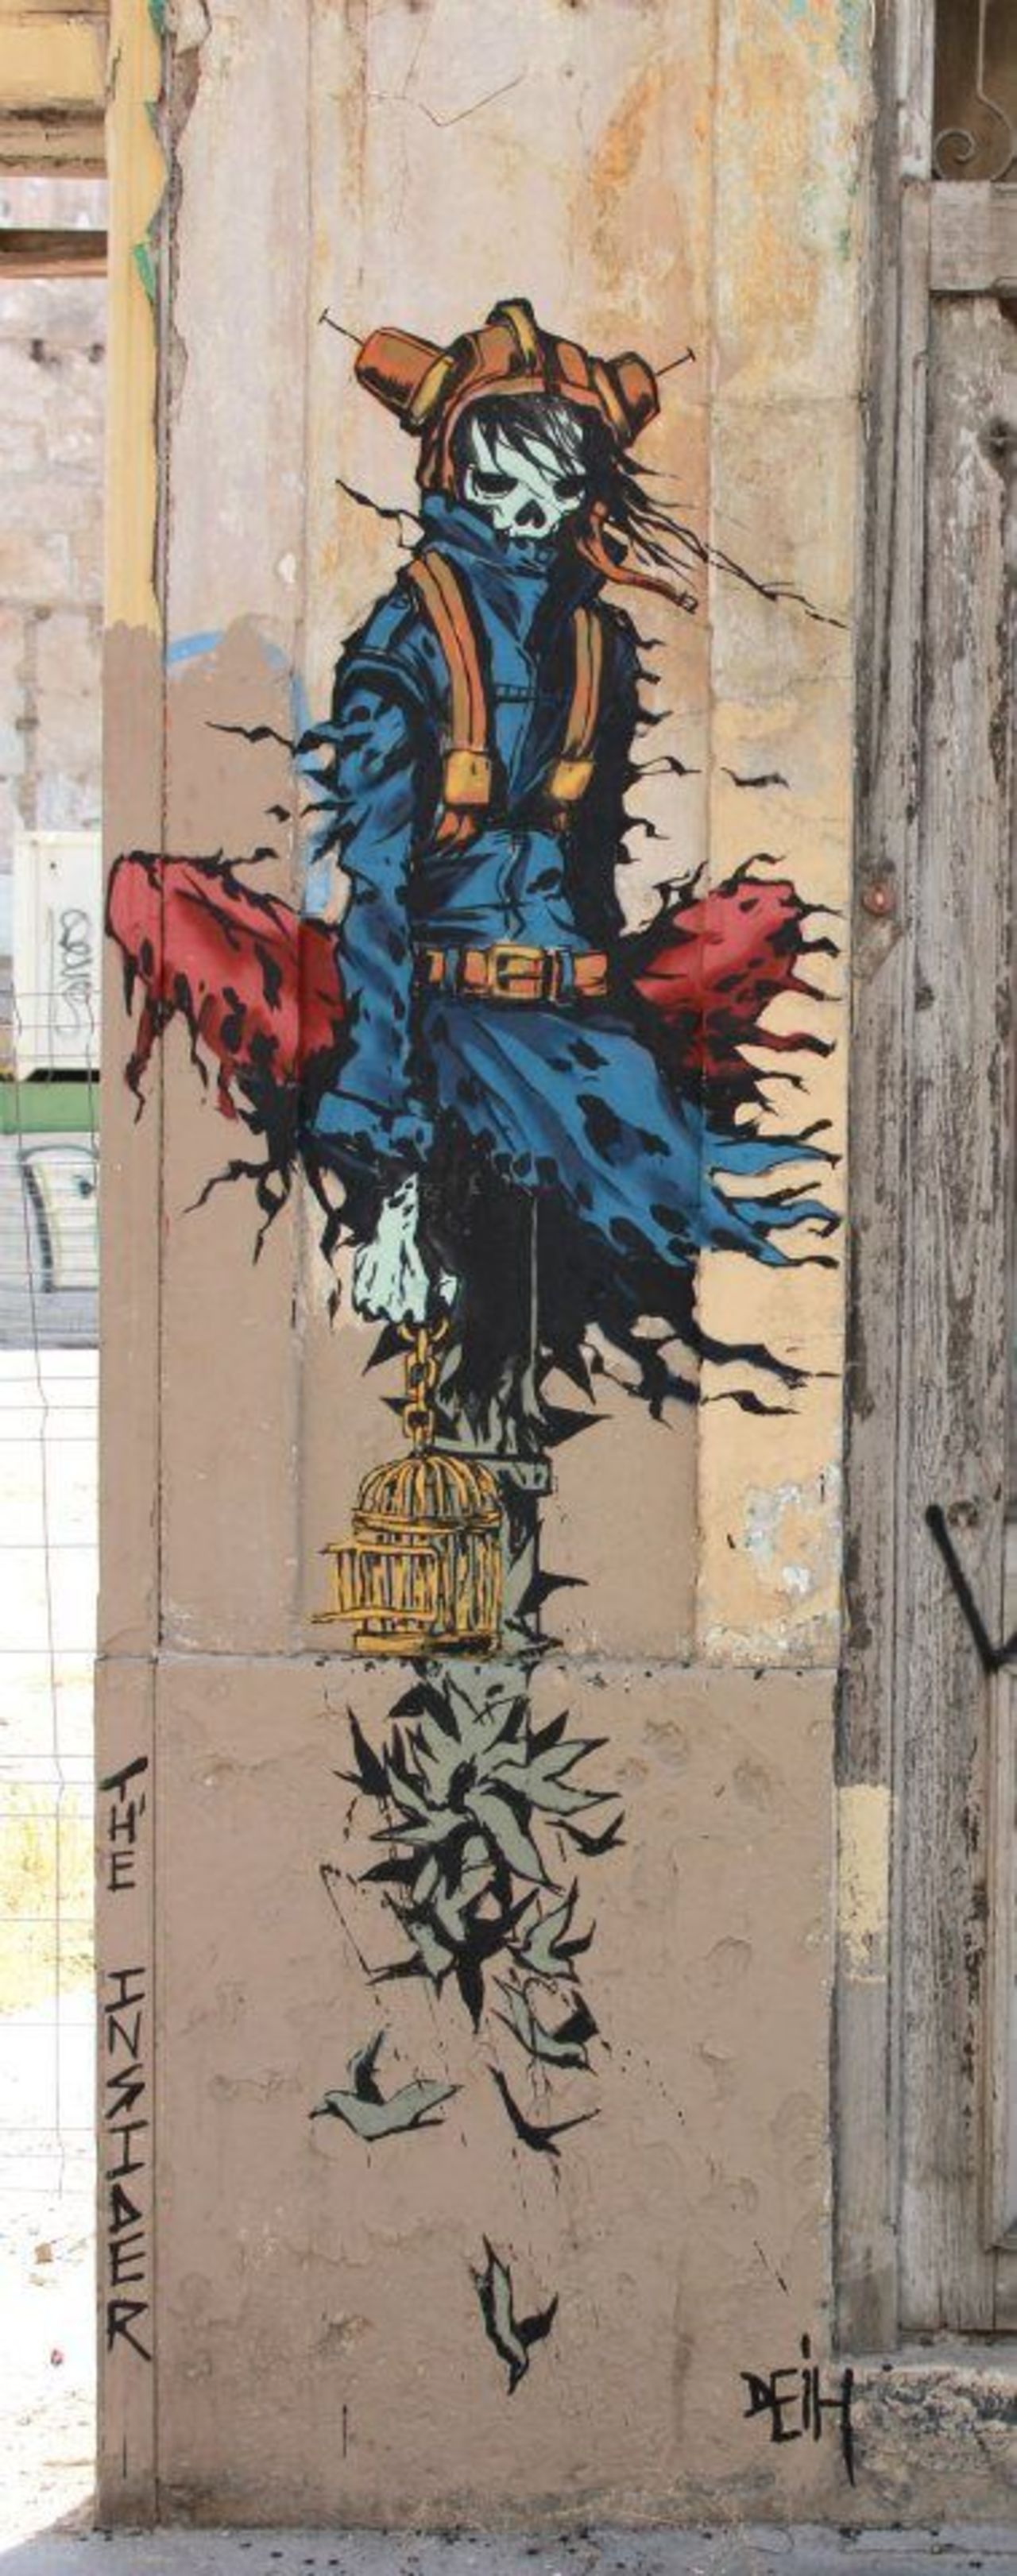 "The Insider" (Valencia, Spain) by Deih#streetart #mural #graffiti #art https://t.co/OfAe7UbclW